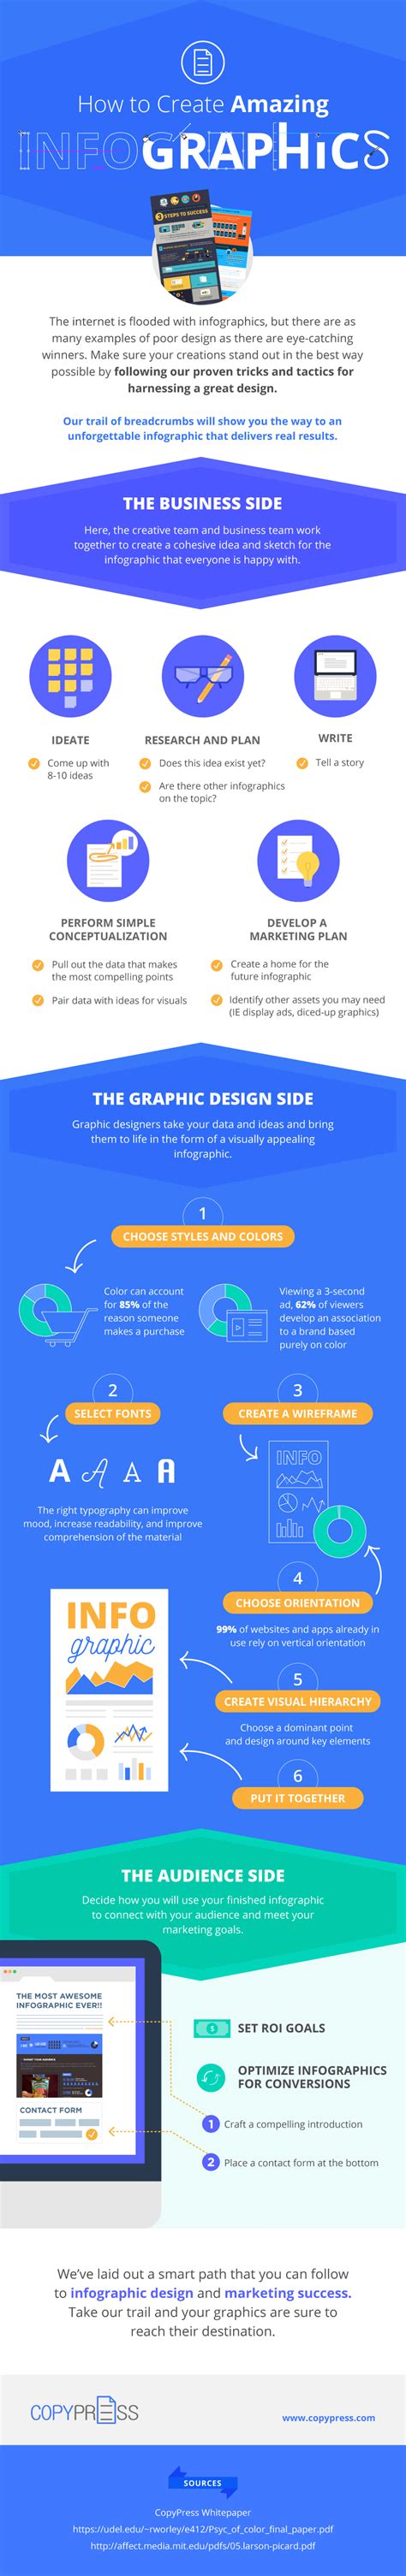 How To Create Amazing Infographics Infographic Visualistan